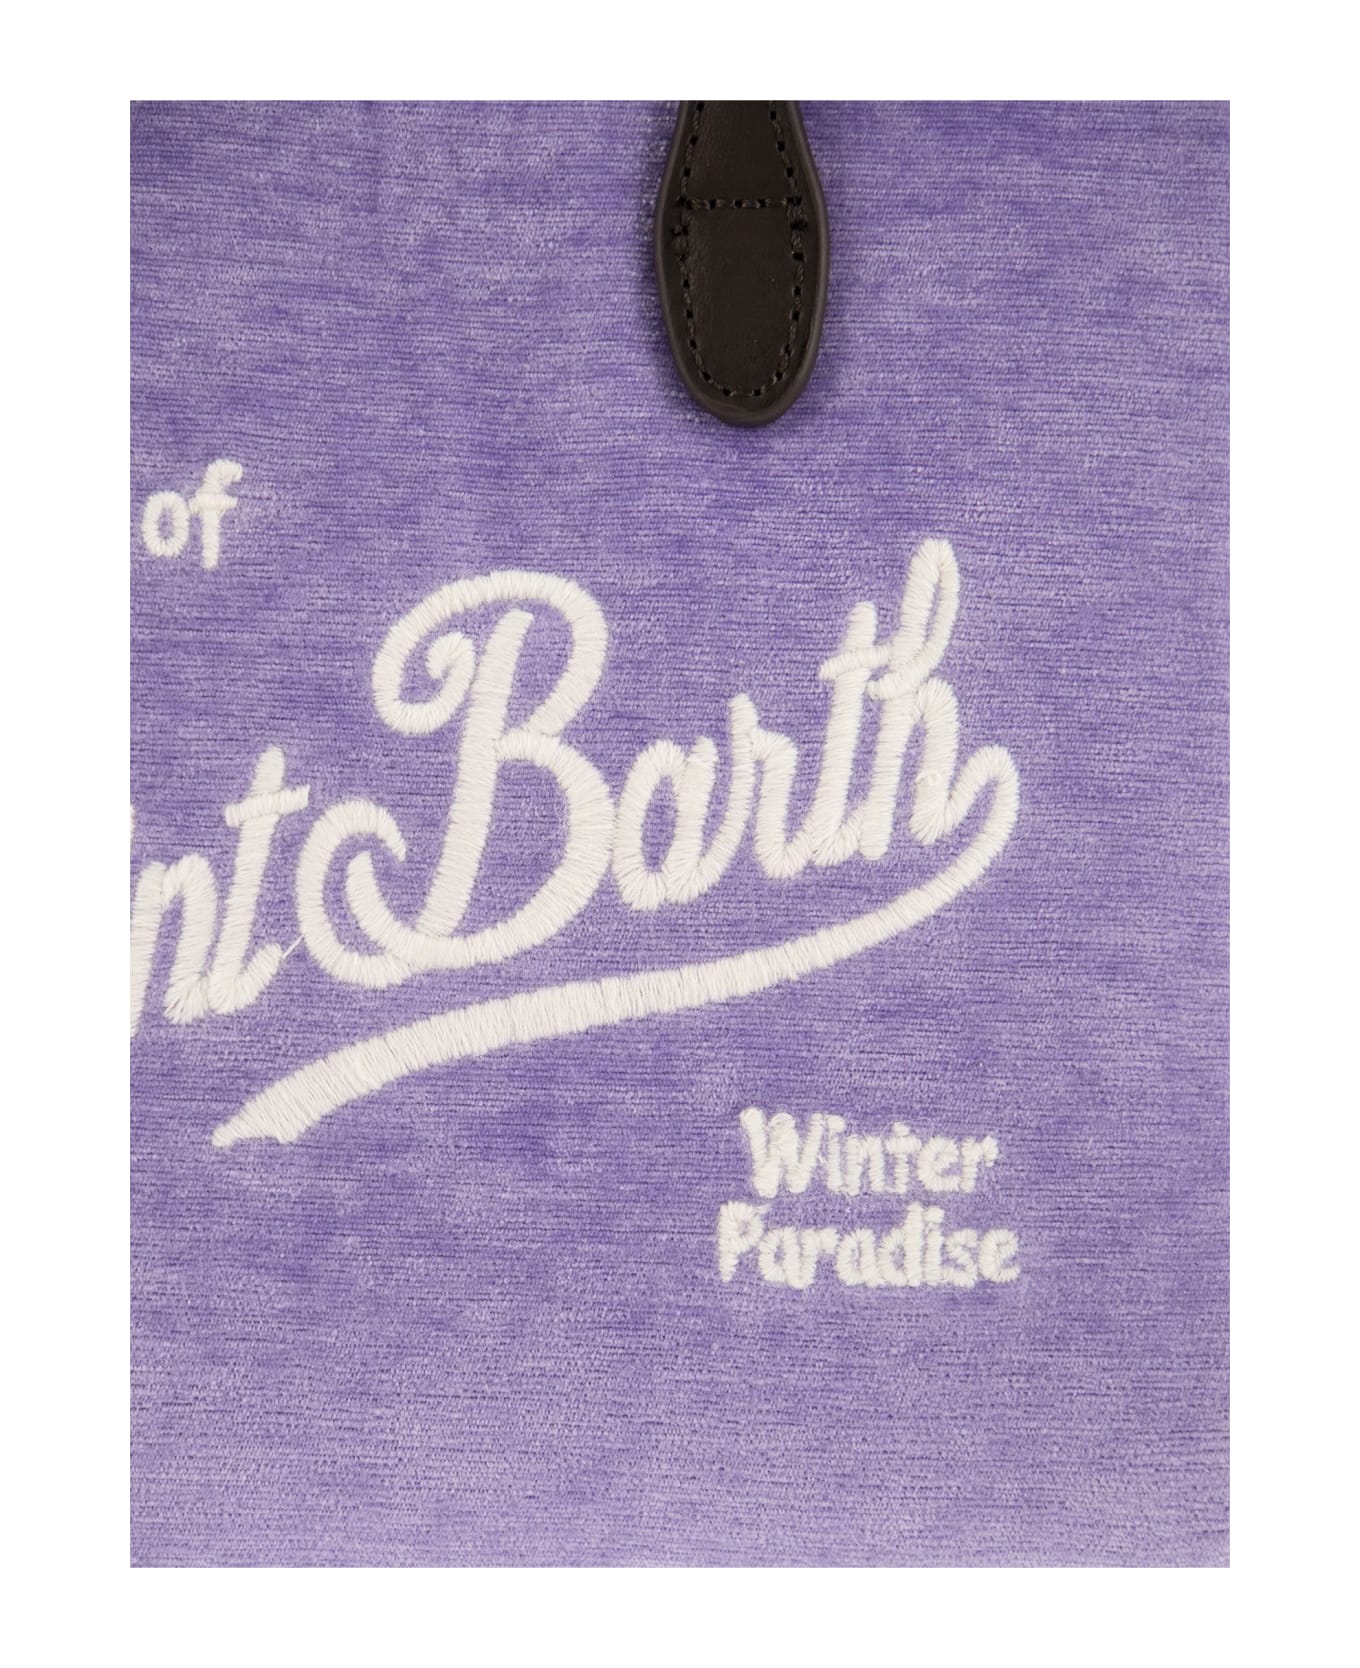 MC2 Saint Barth Mini Vanity Bag With Velvet Fringes - Lilac